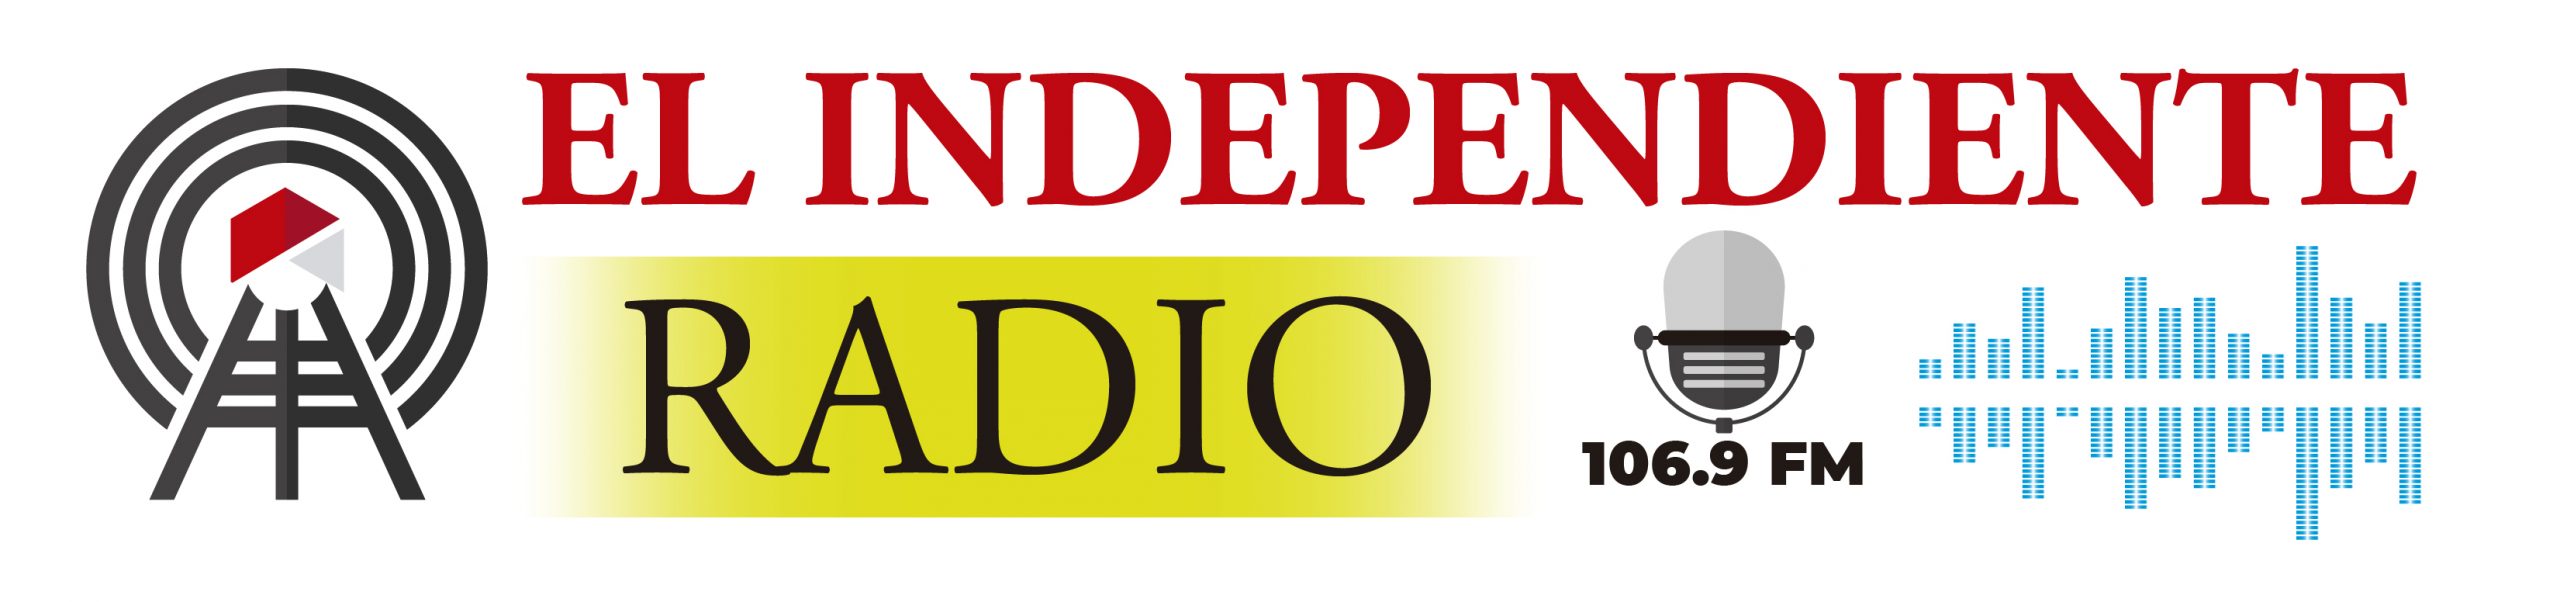 Independiente Radio